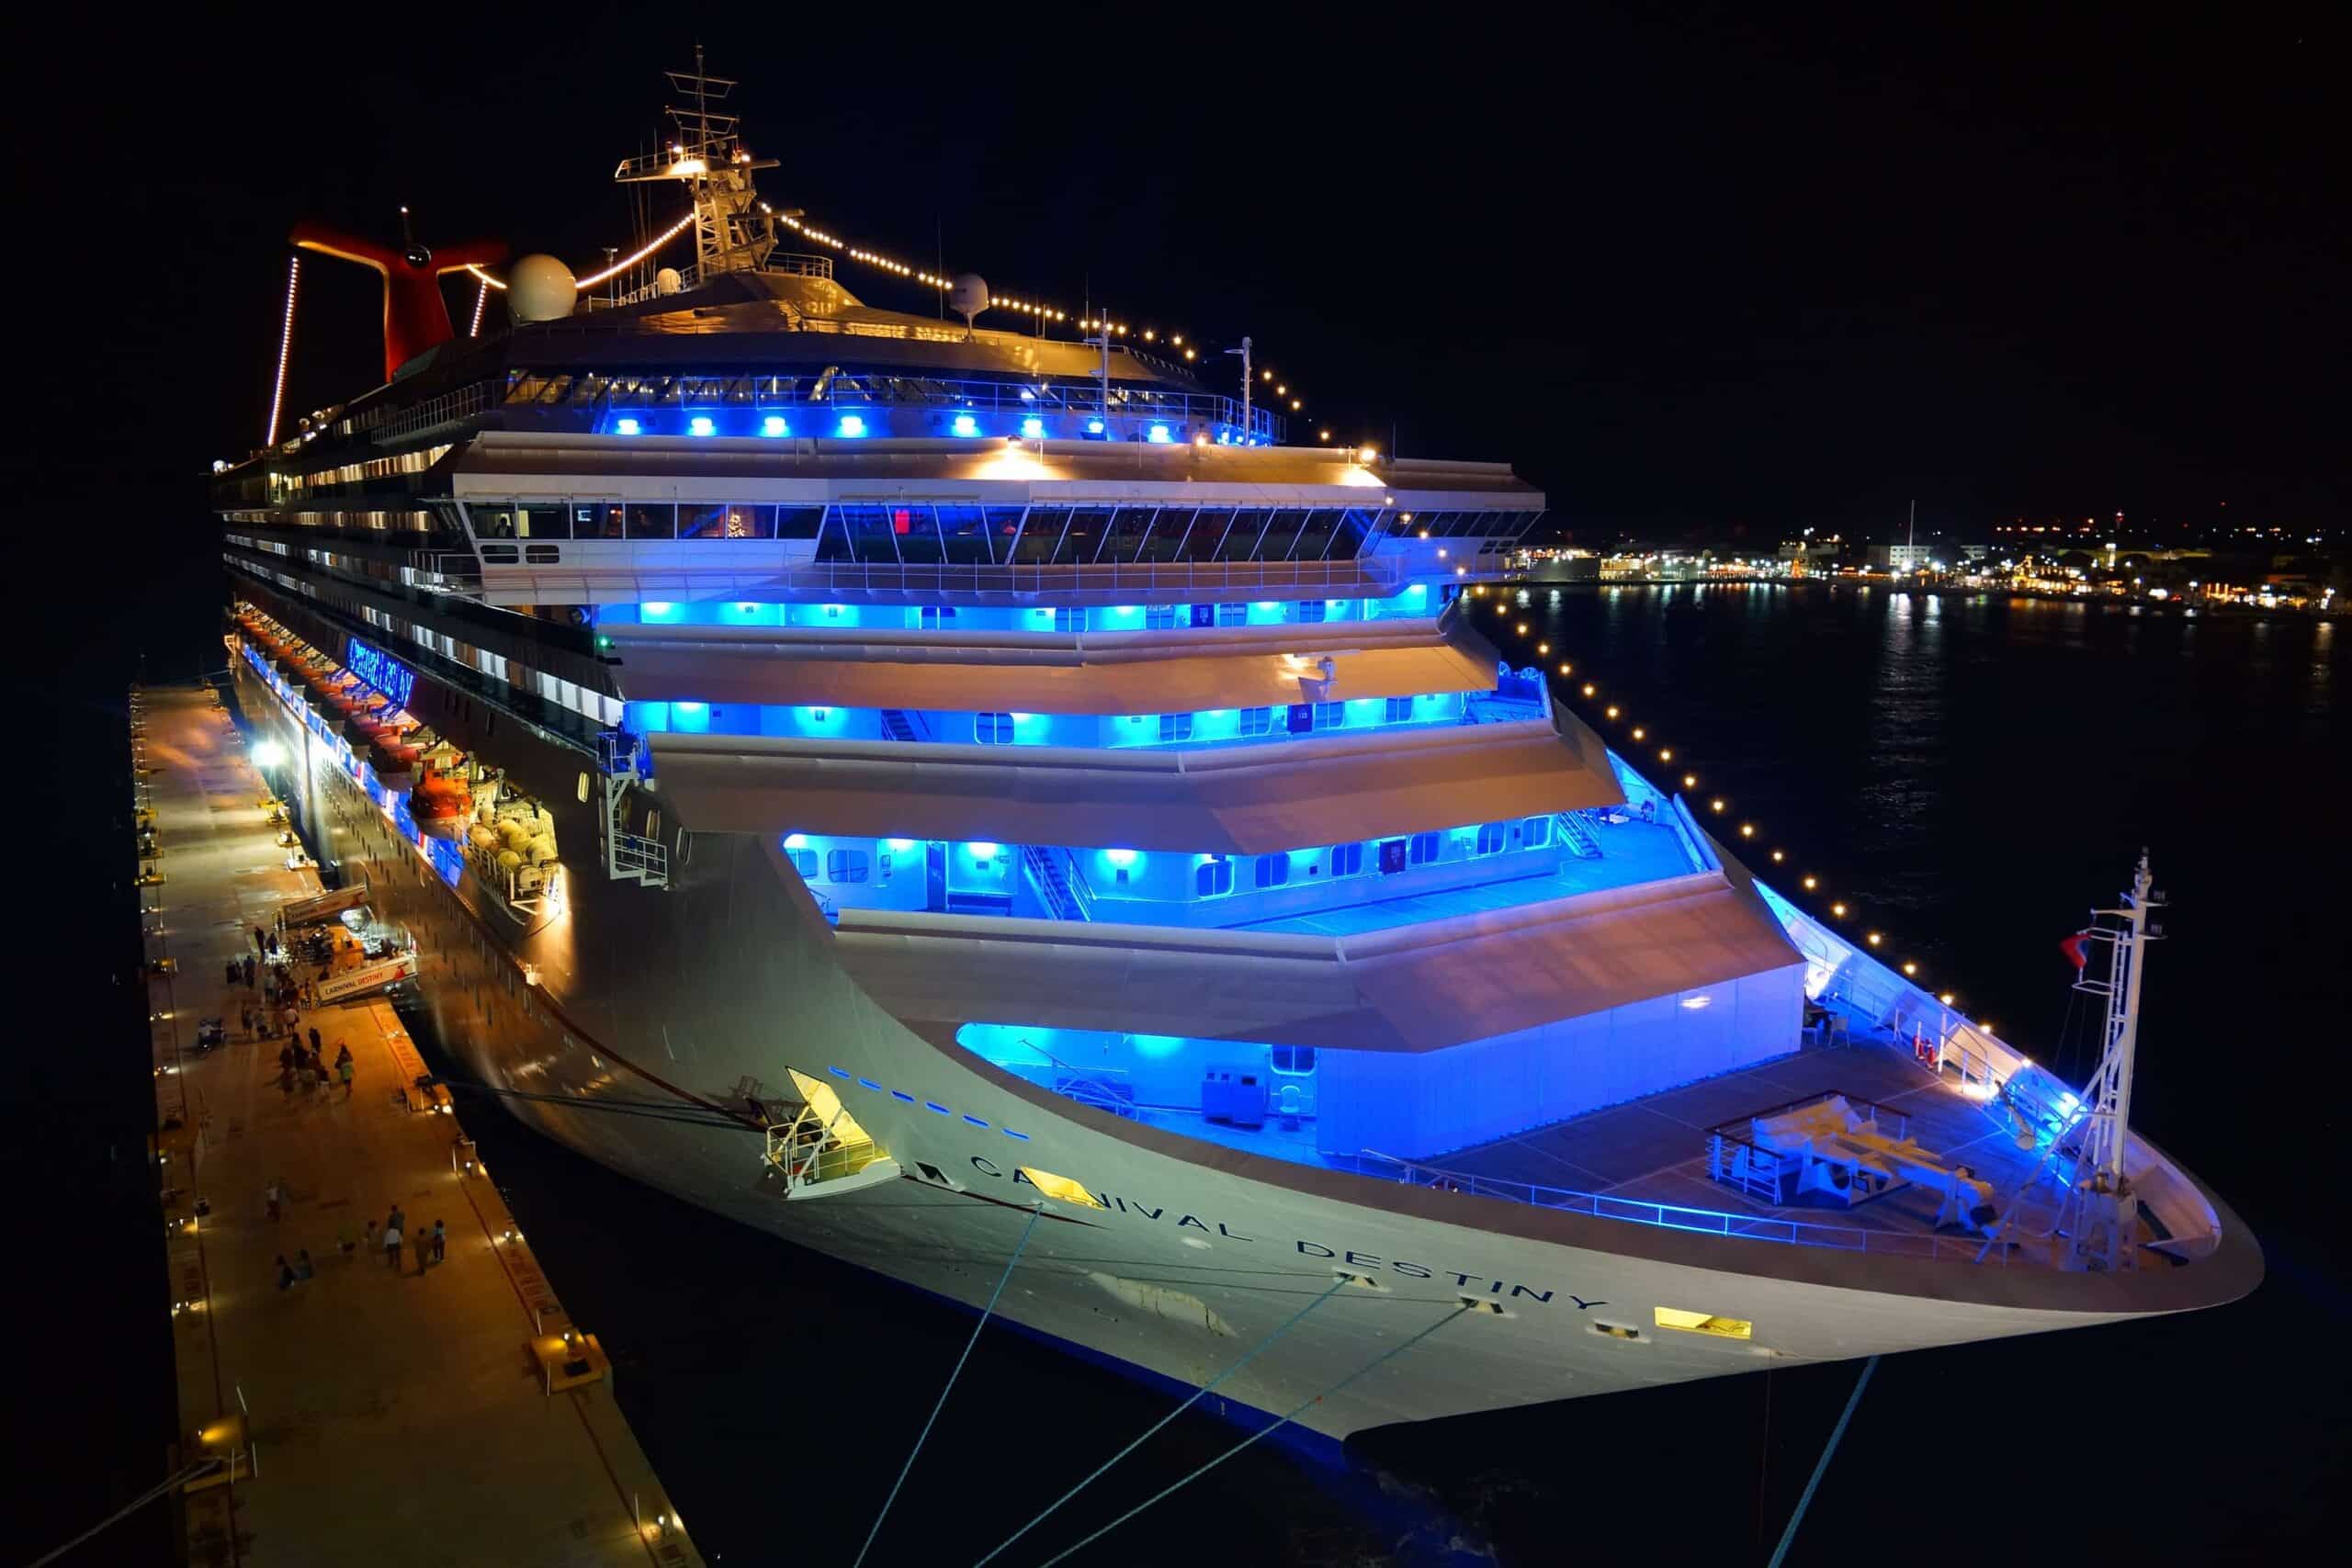 Cruise ship casinos